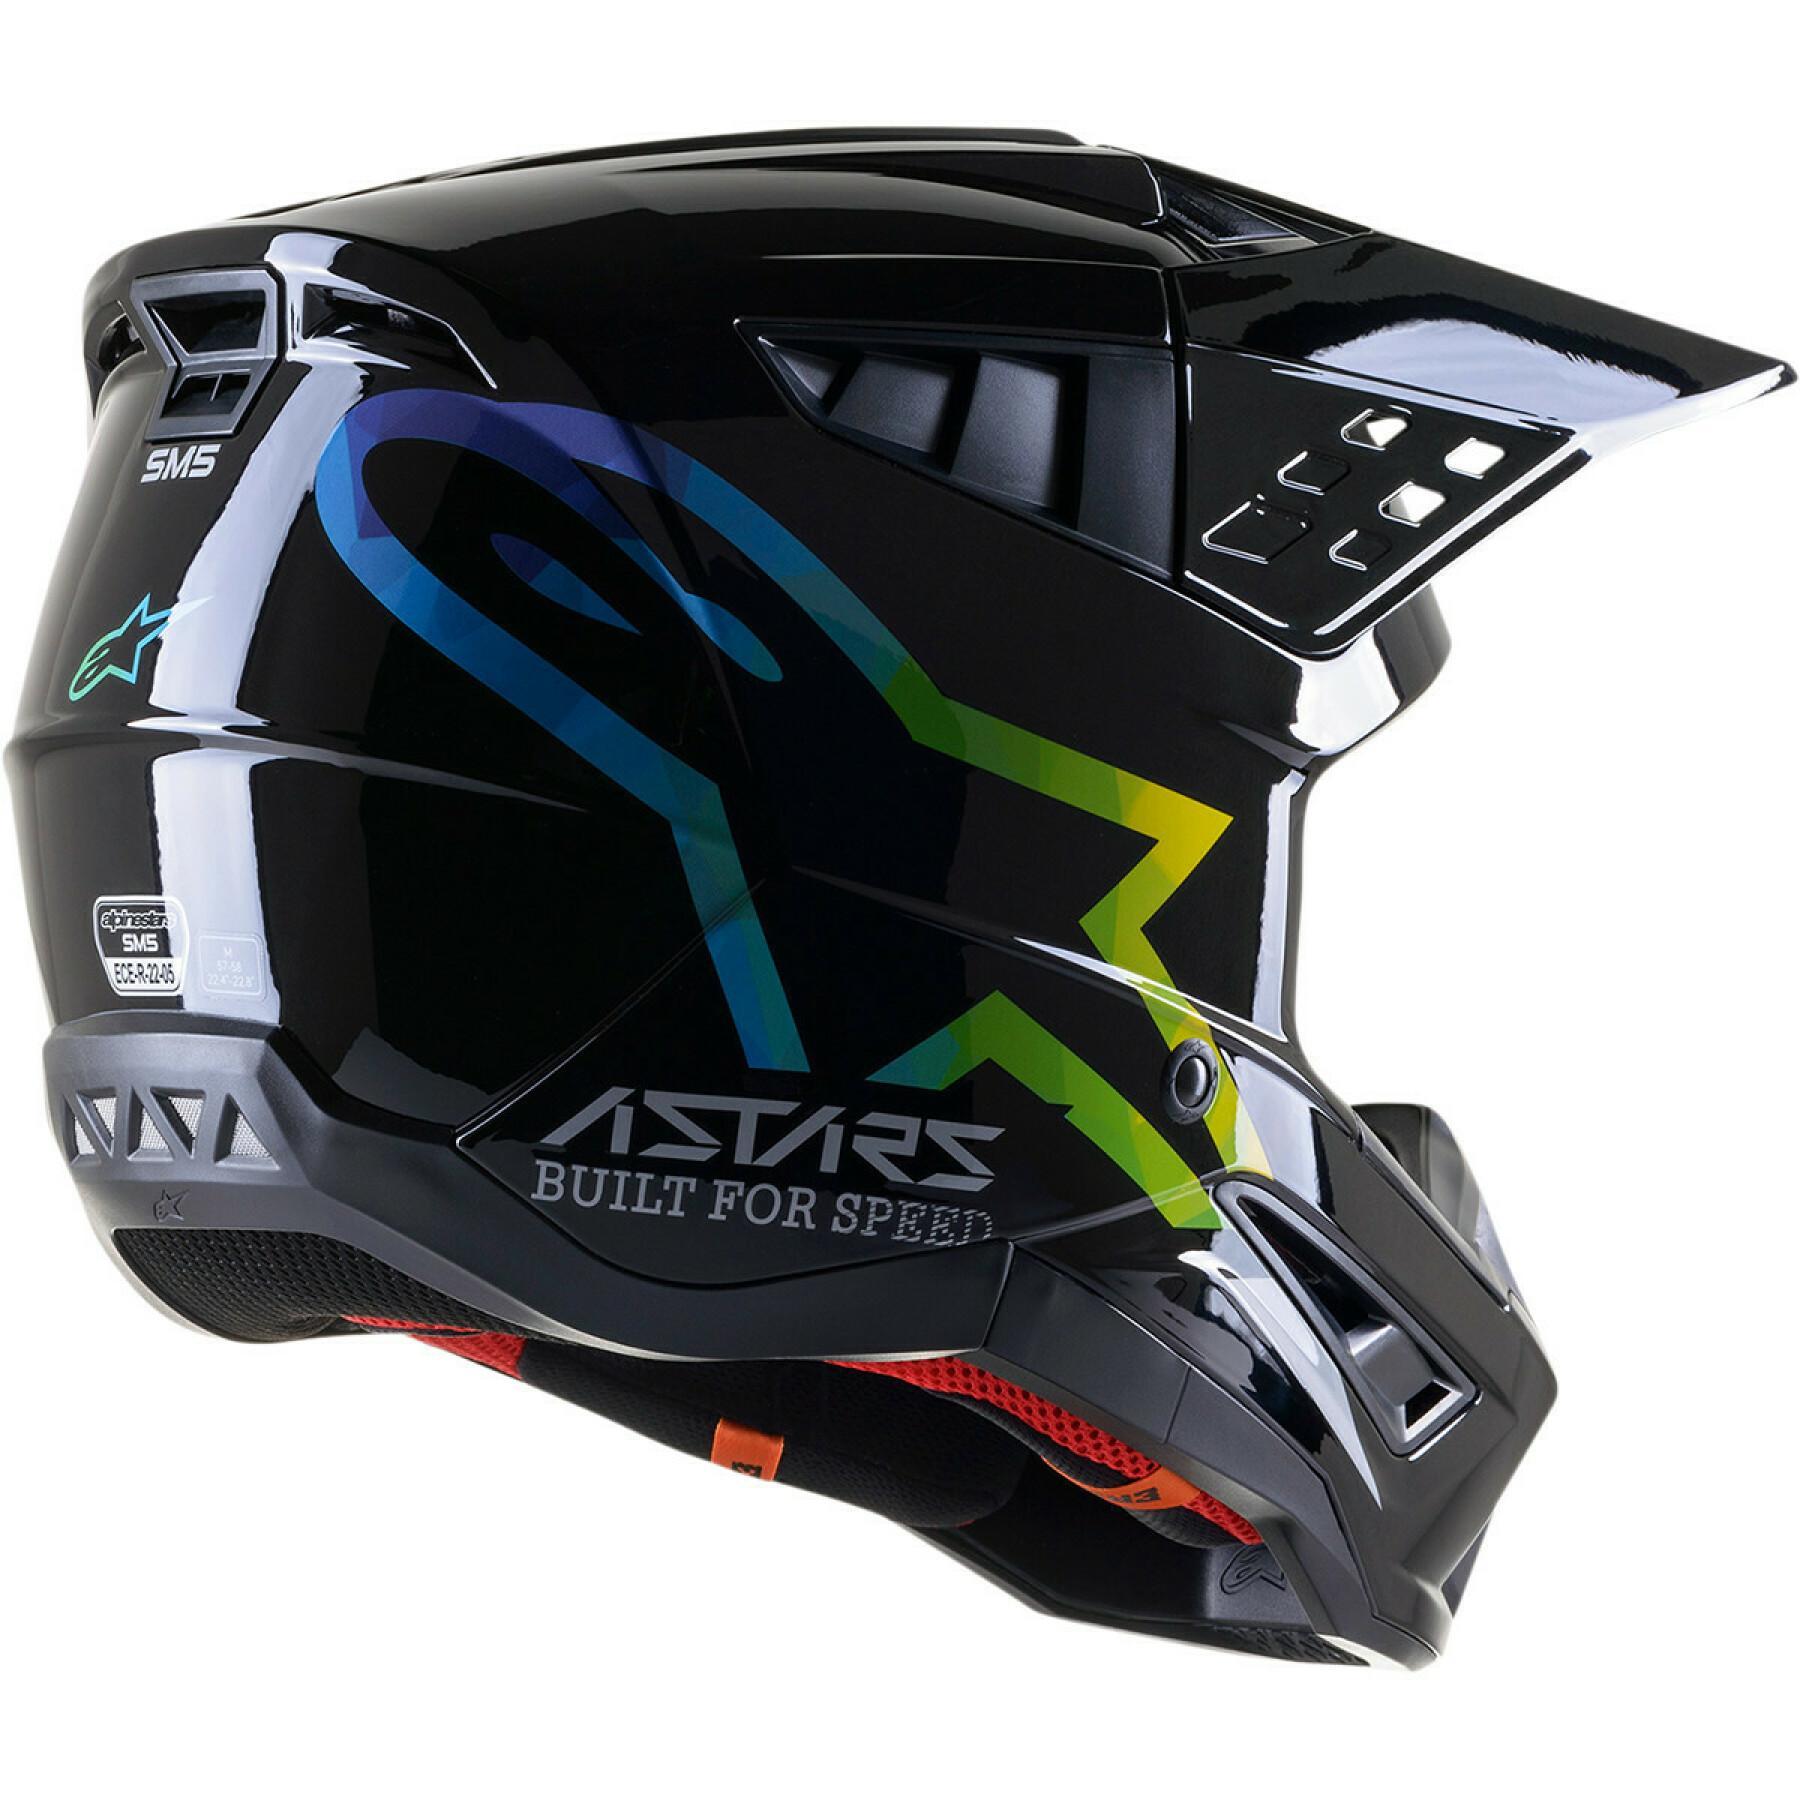 Motorcycle helmet Alpinestars SM5 compass